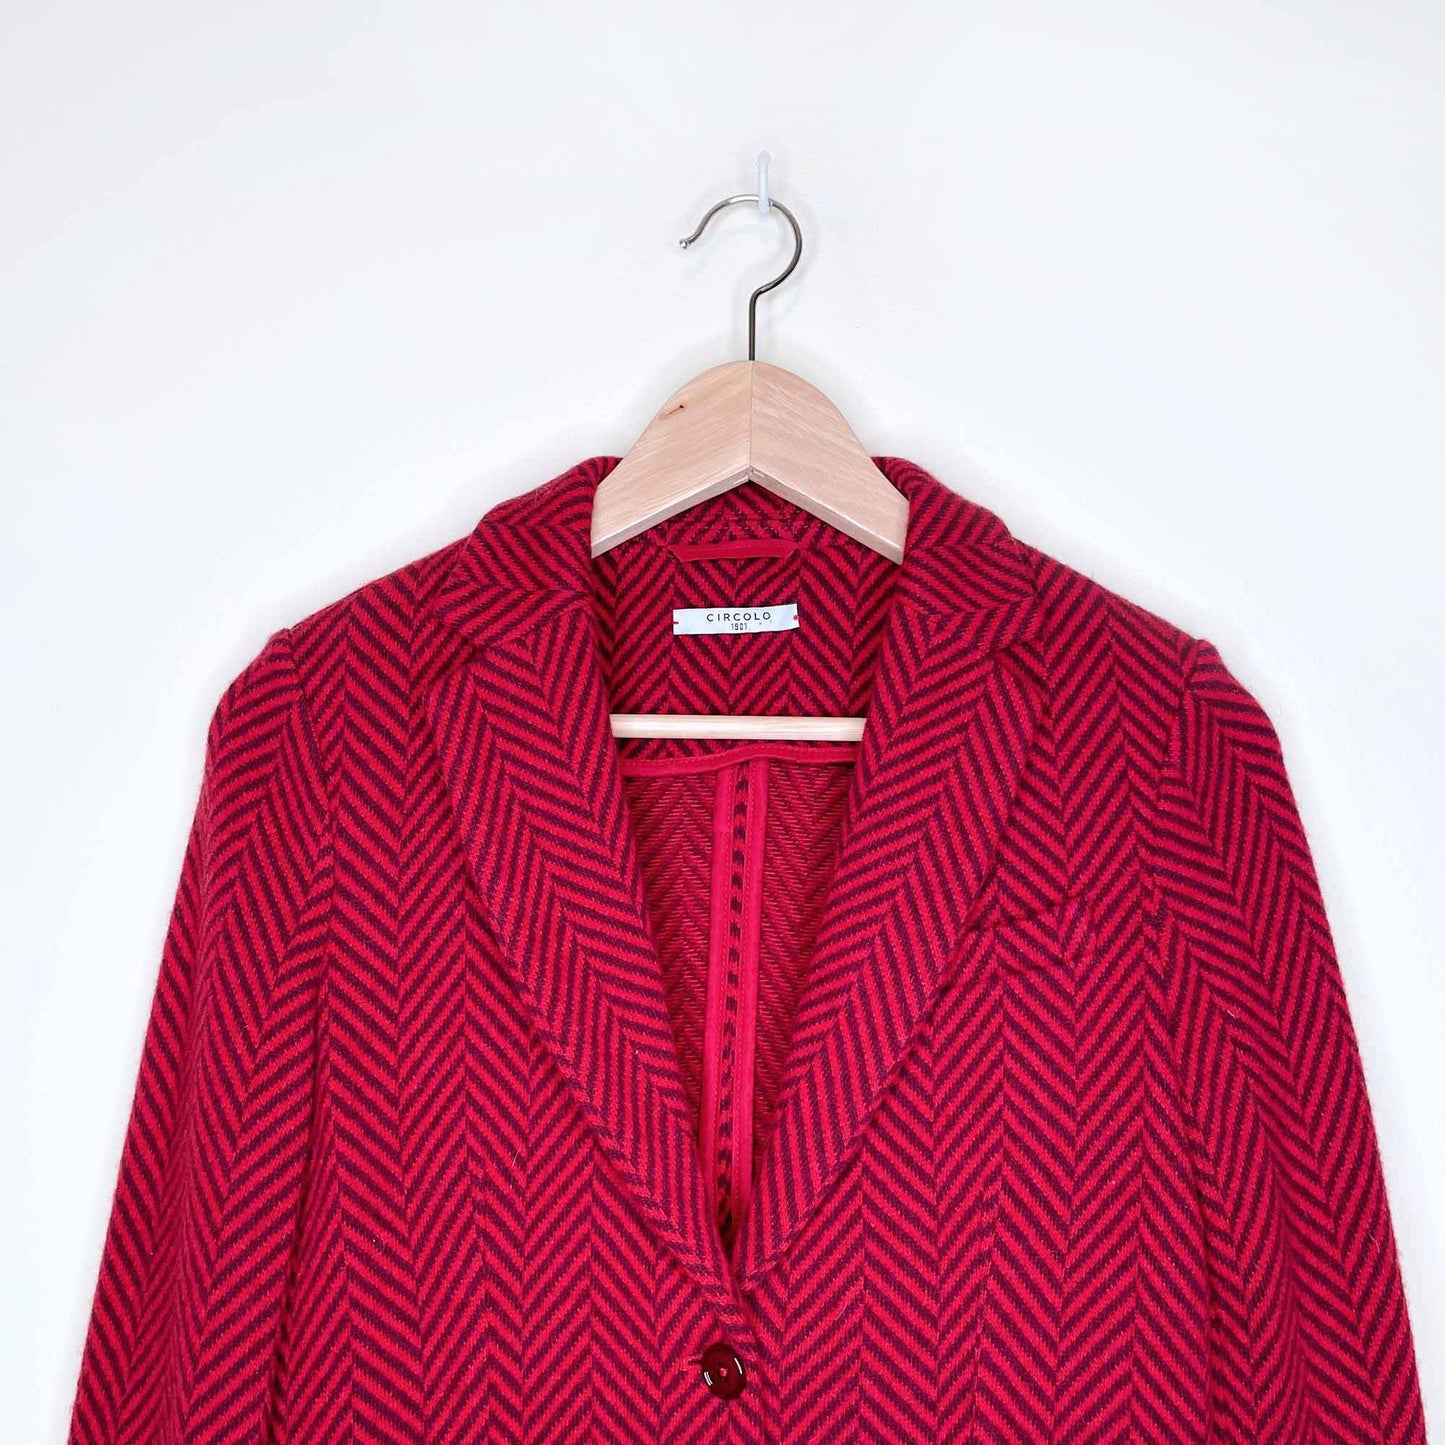 circolo 1901 herringbone knit blazer jacket - size small